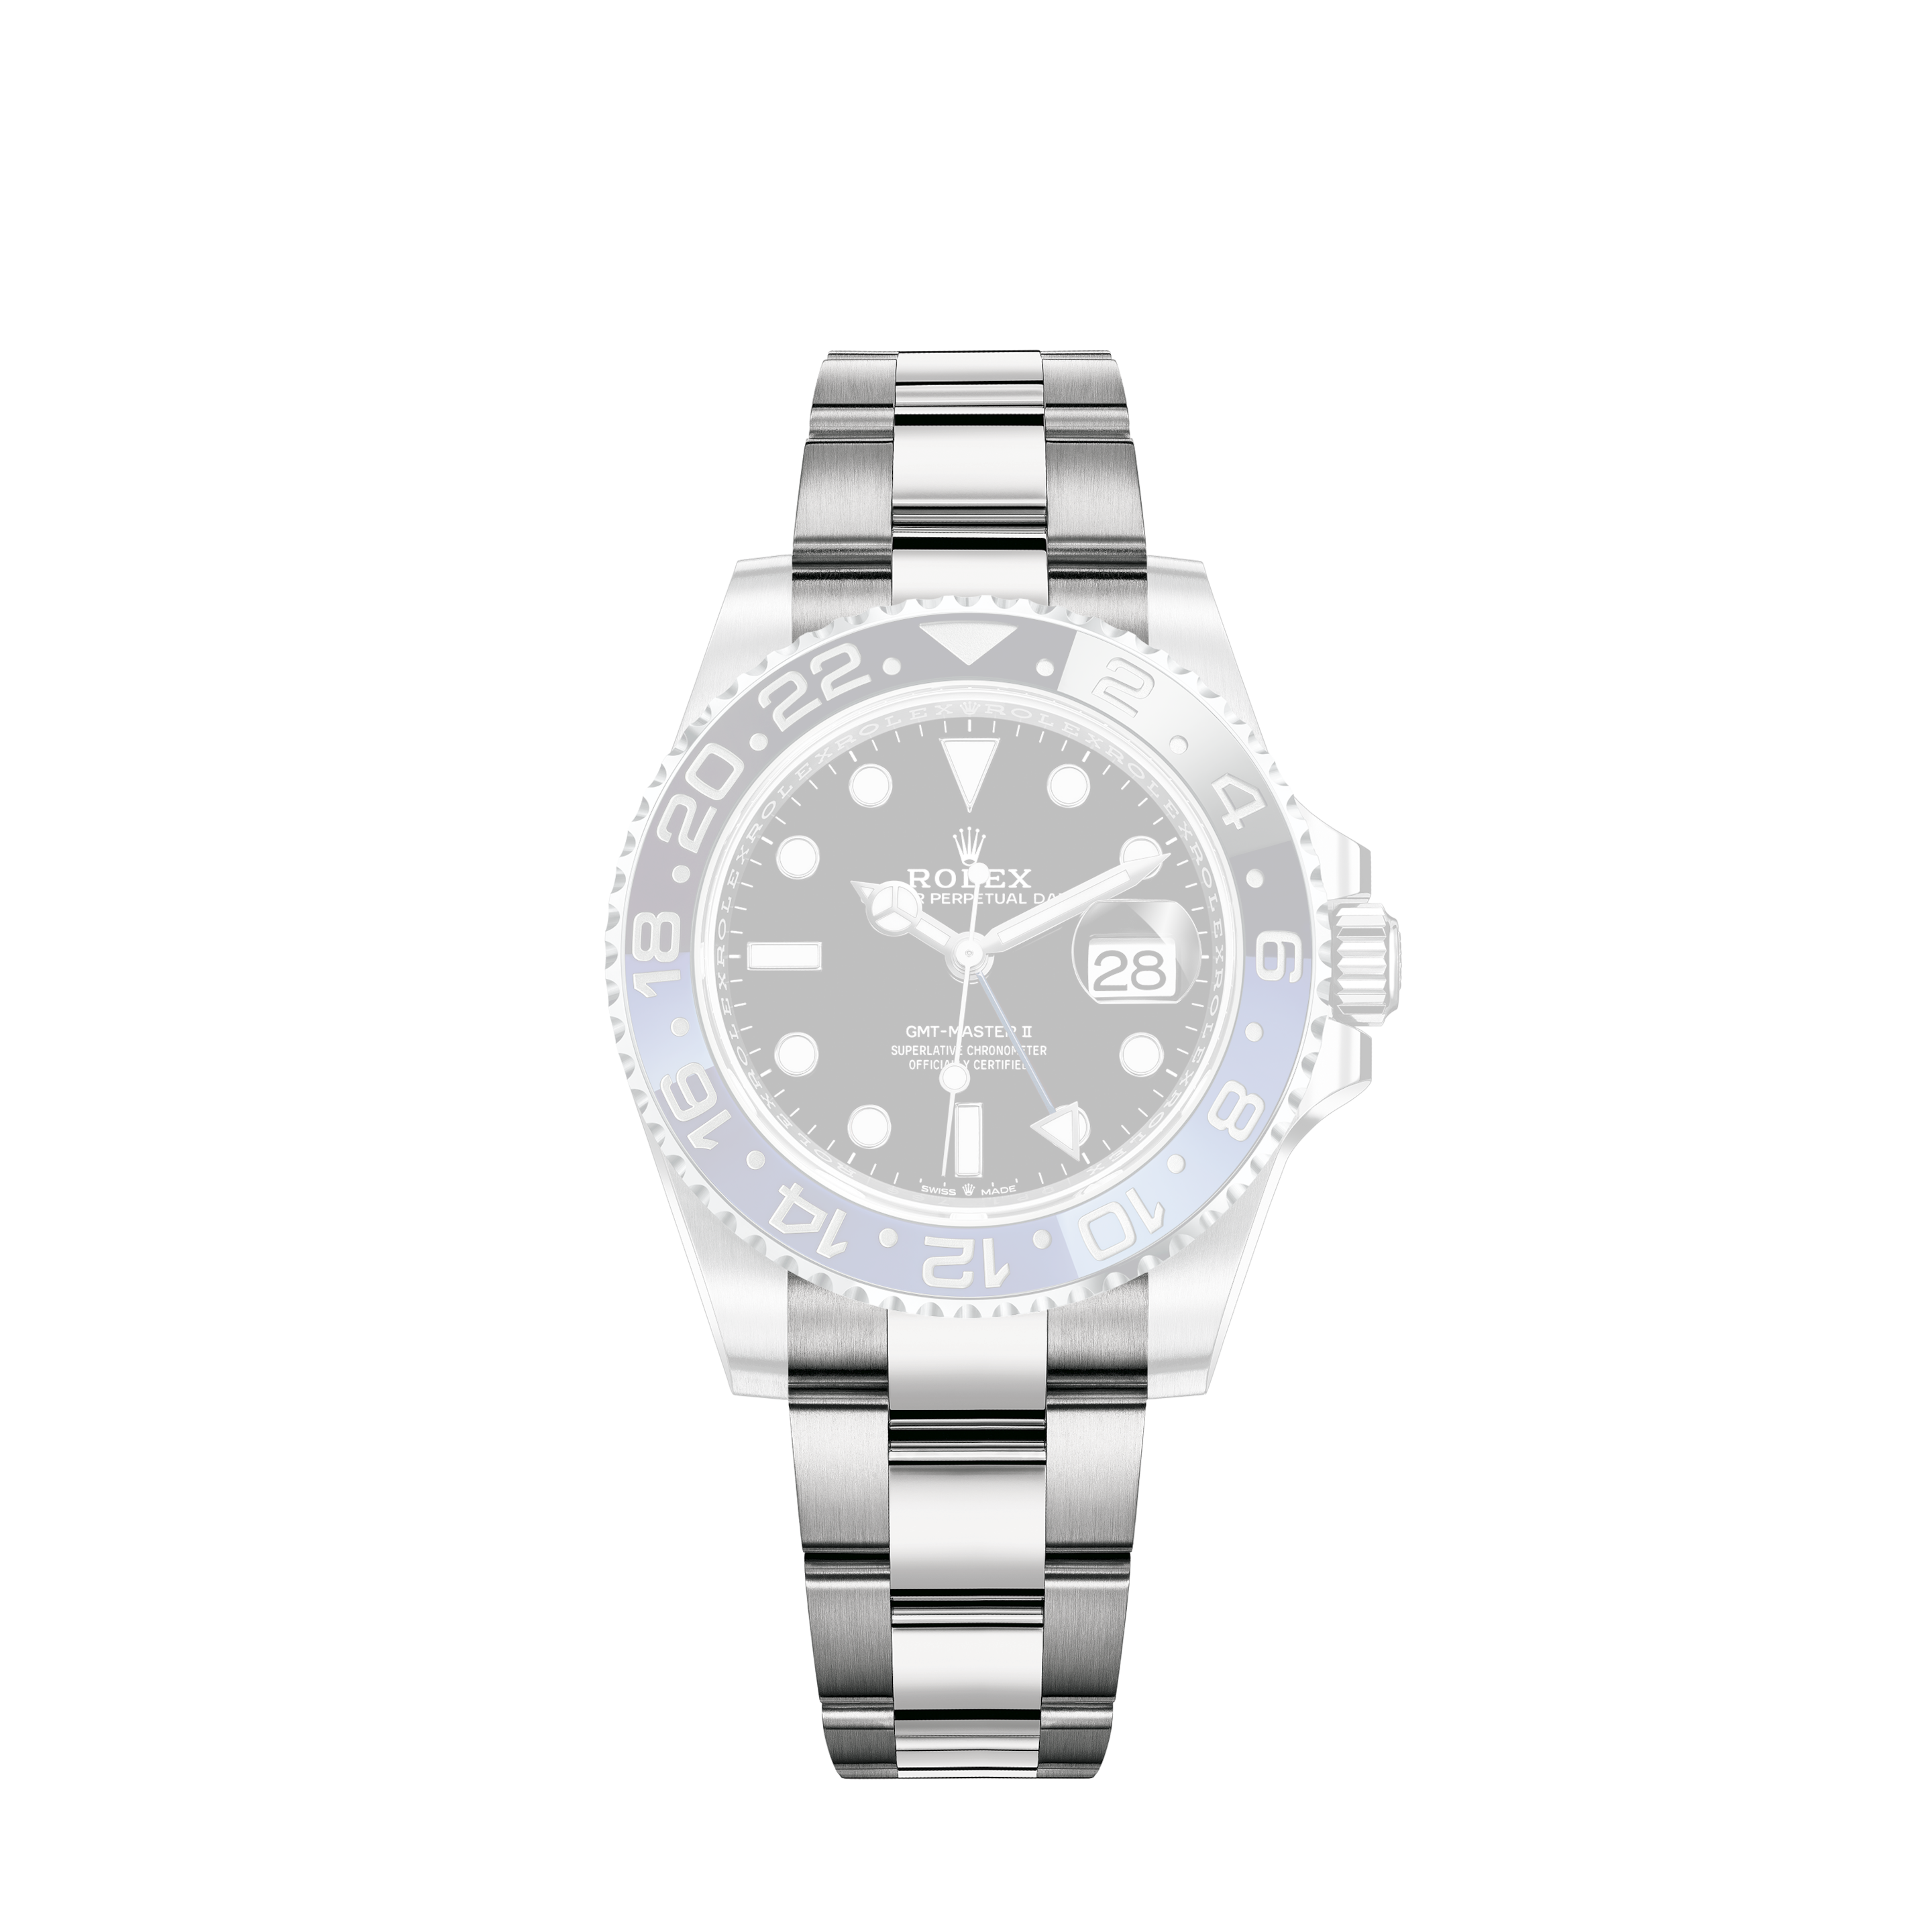 Rolex Cosmograph Daytona Steel Automatic White Dial Men's Watch - 116520